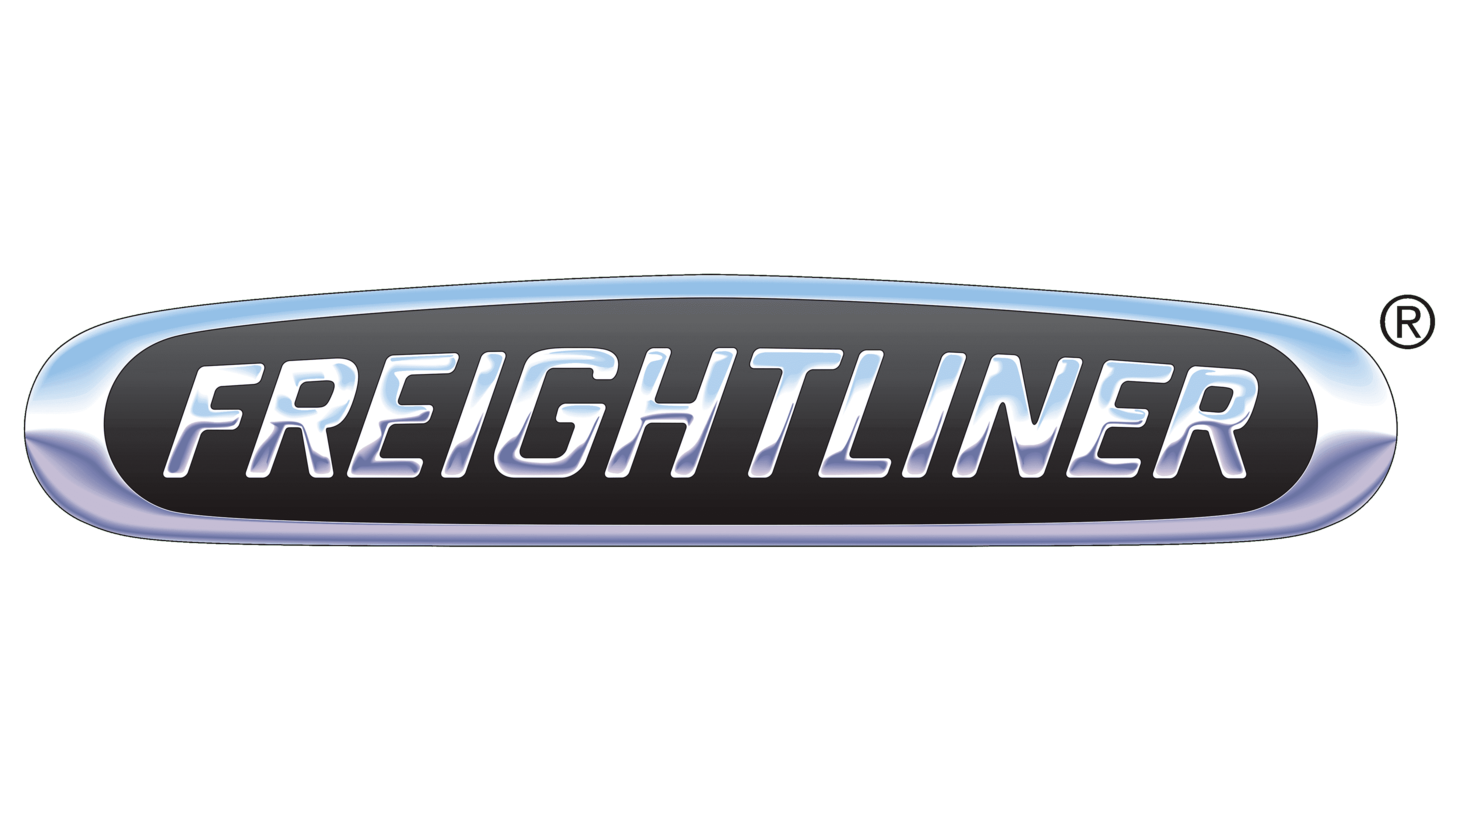 Freightliner trucks sign